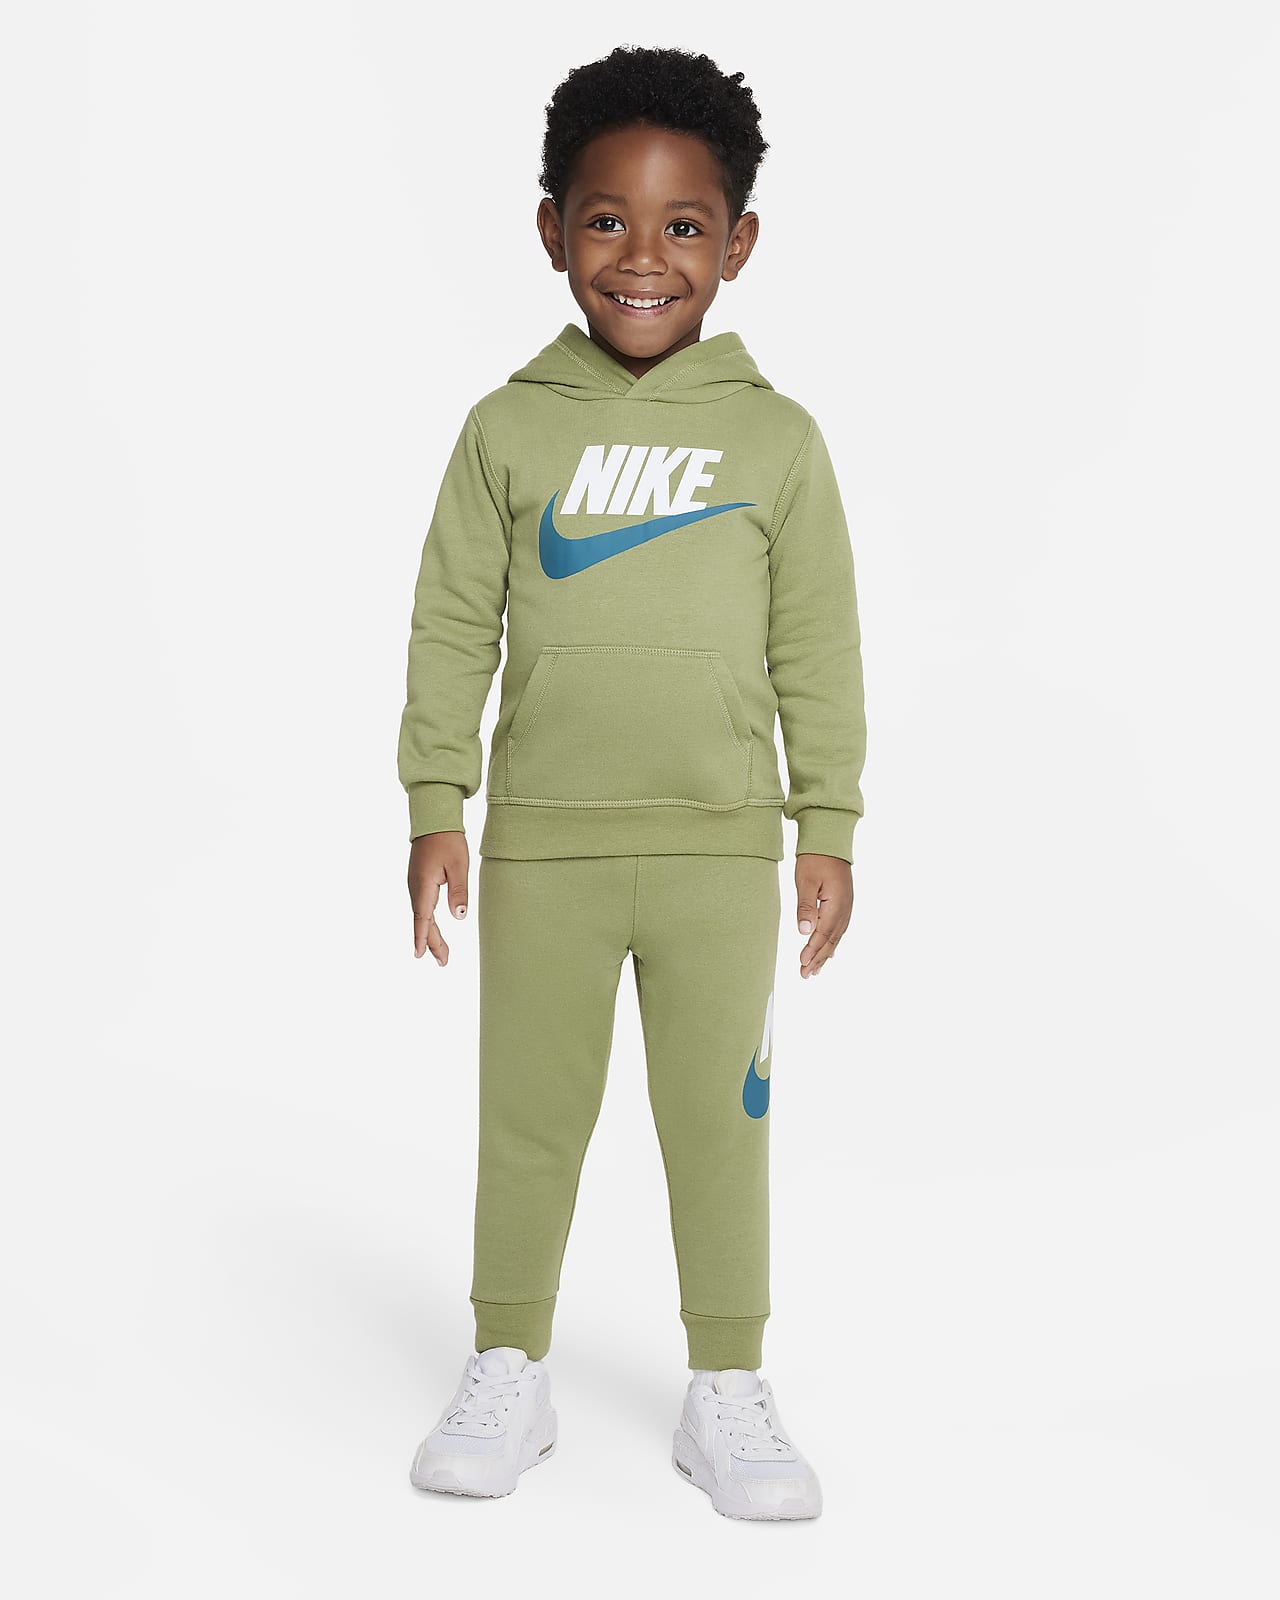 Nike Toddler Hoodie and Set. Nike.com